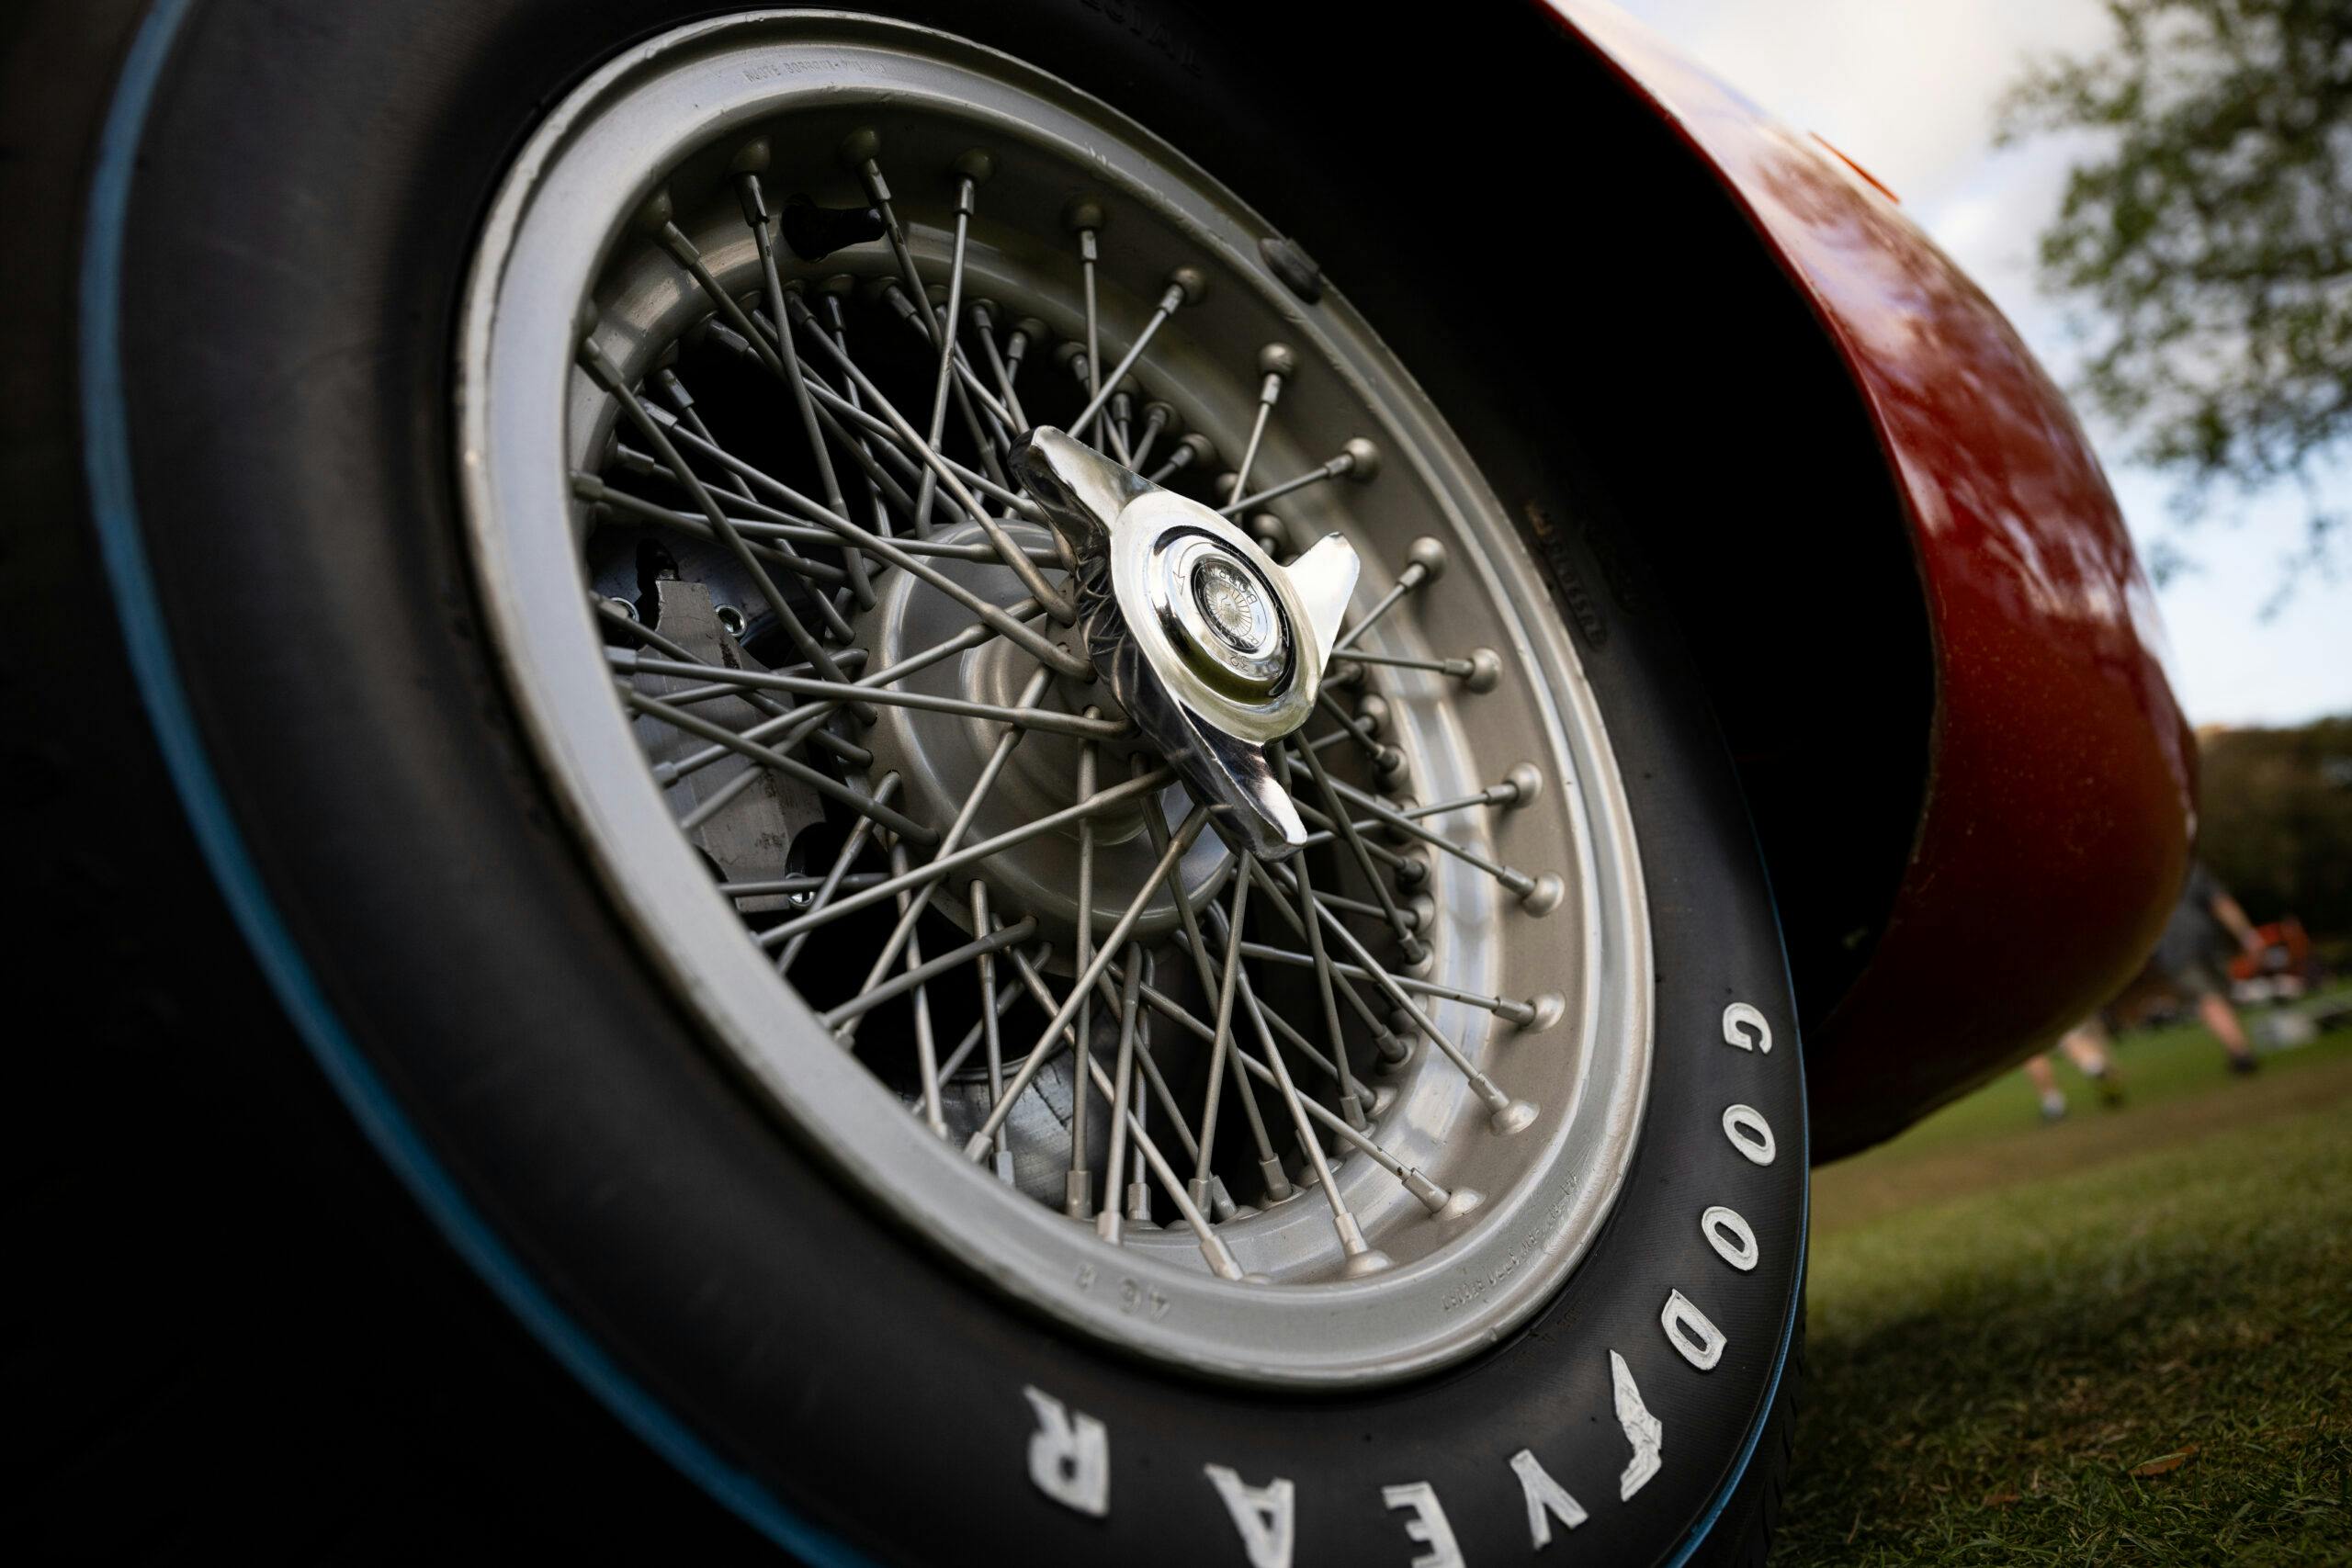 1964 Ferrari 250 LM wheel tire